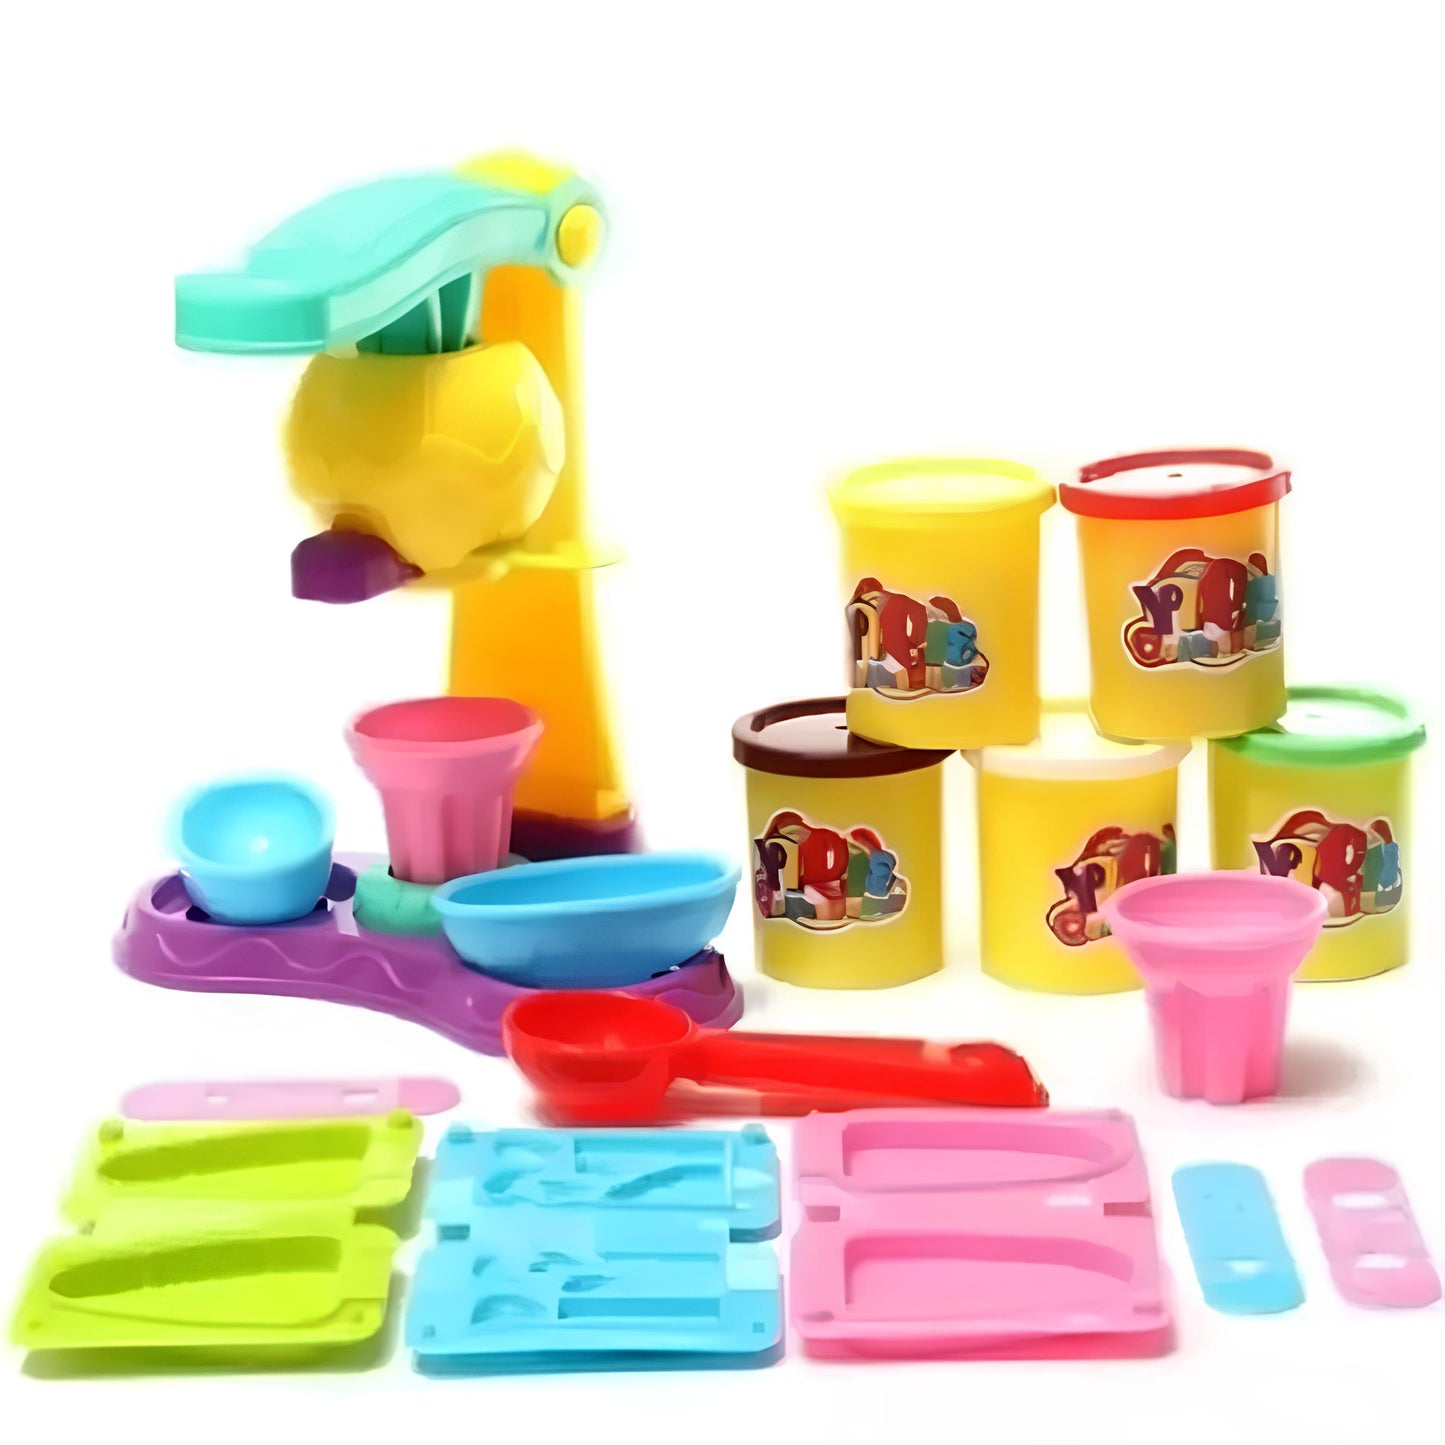 Color Clay Diy Ice cream Party | DIY Toy For Kids